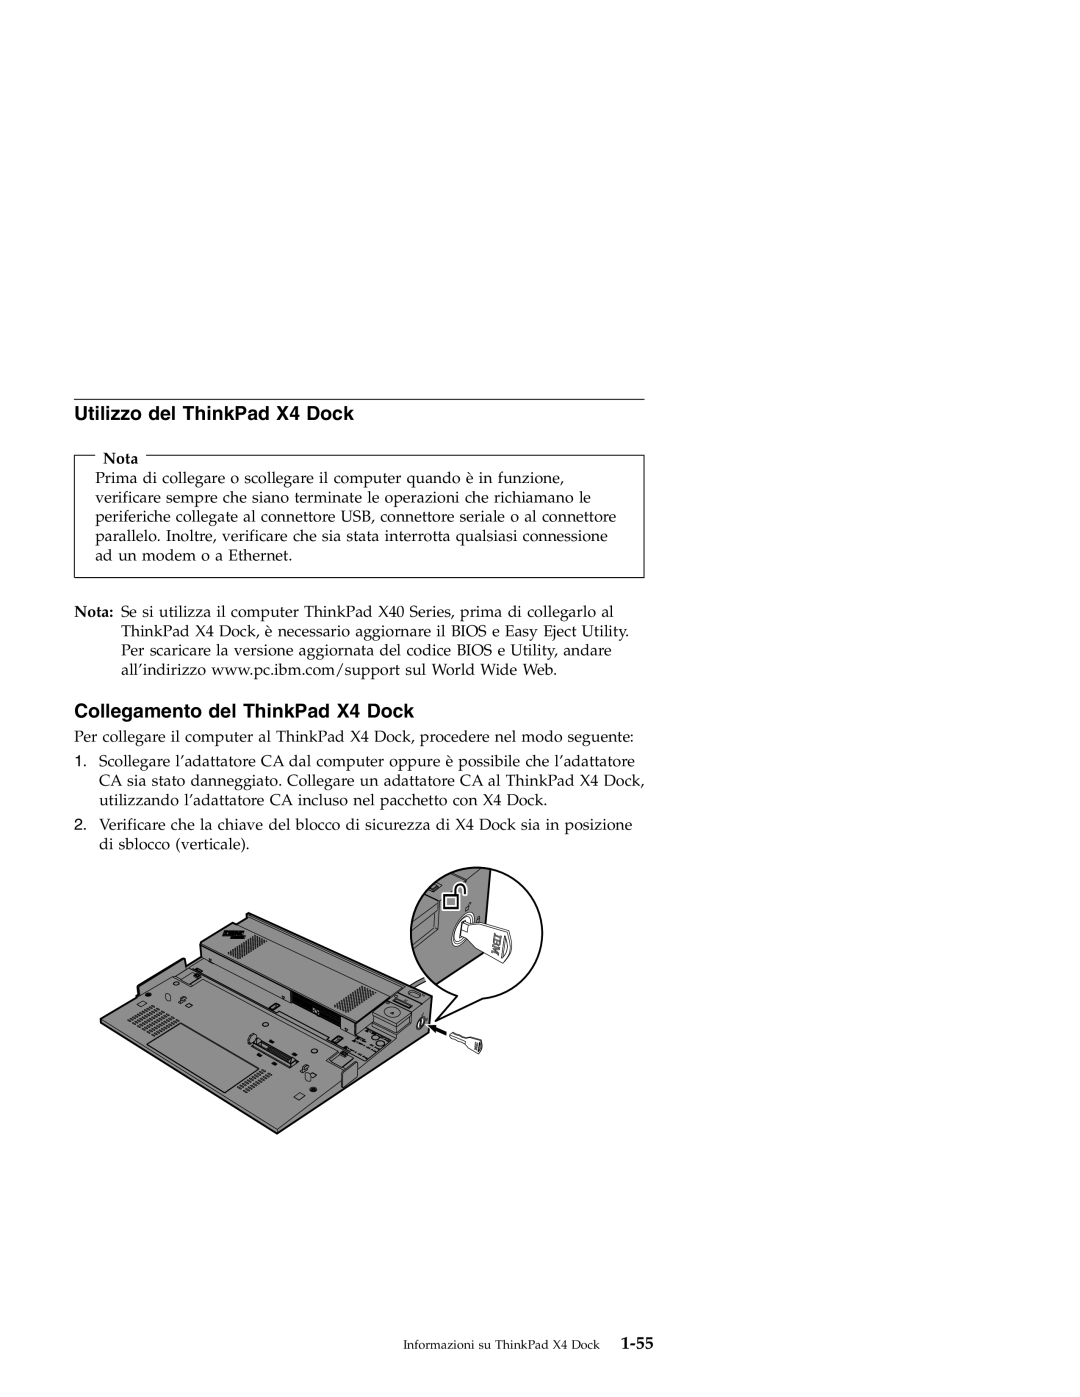 IBM manual Utilizzo del ThinkPad X4 Dock, Collegamento del ThinkPad X4 Dock, Nota 